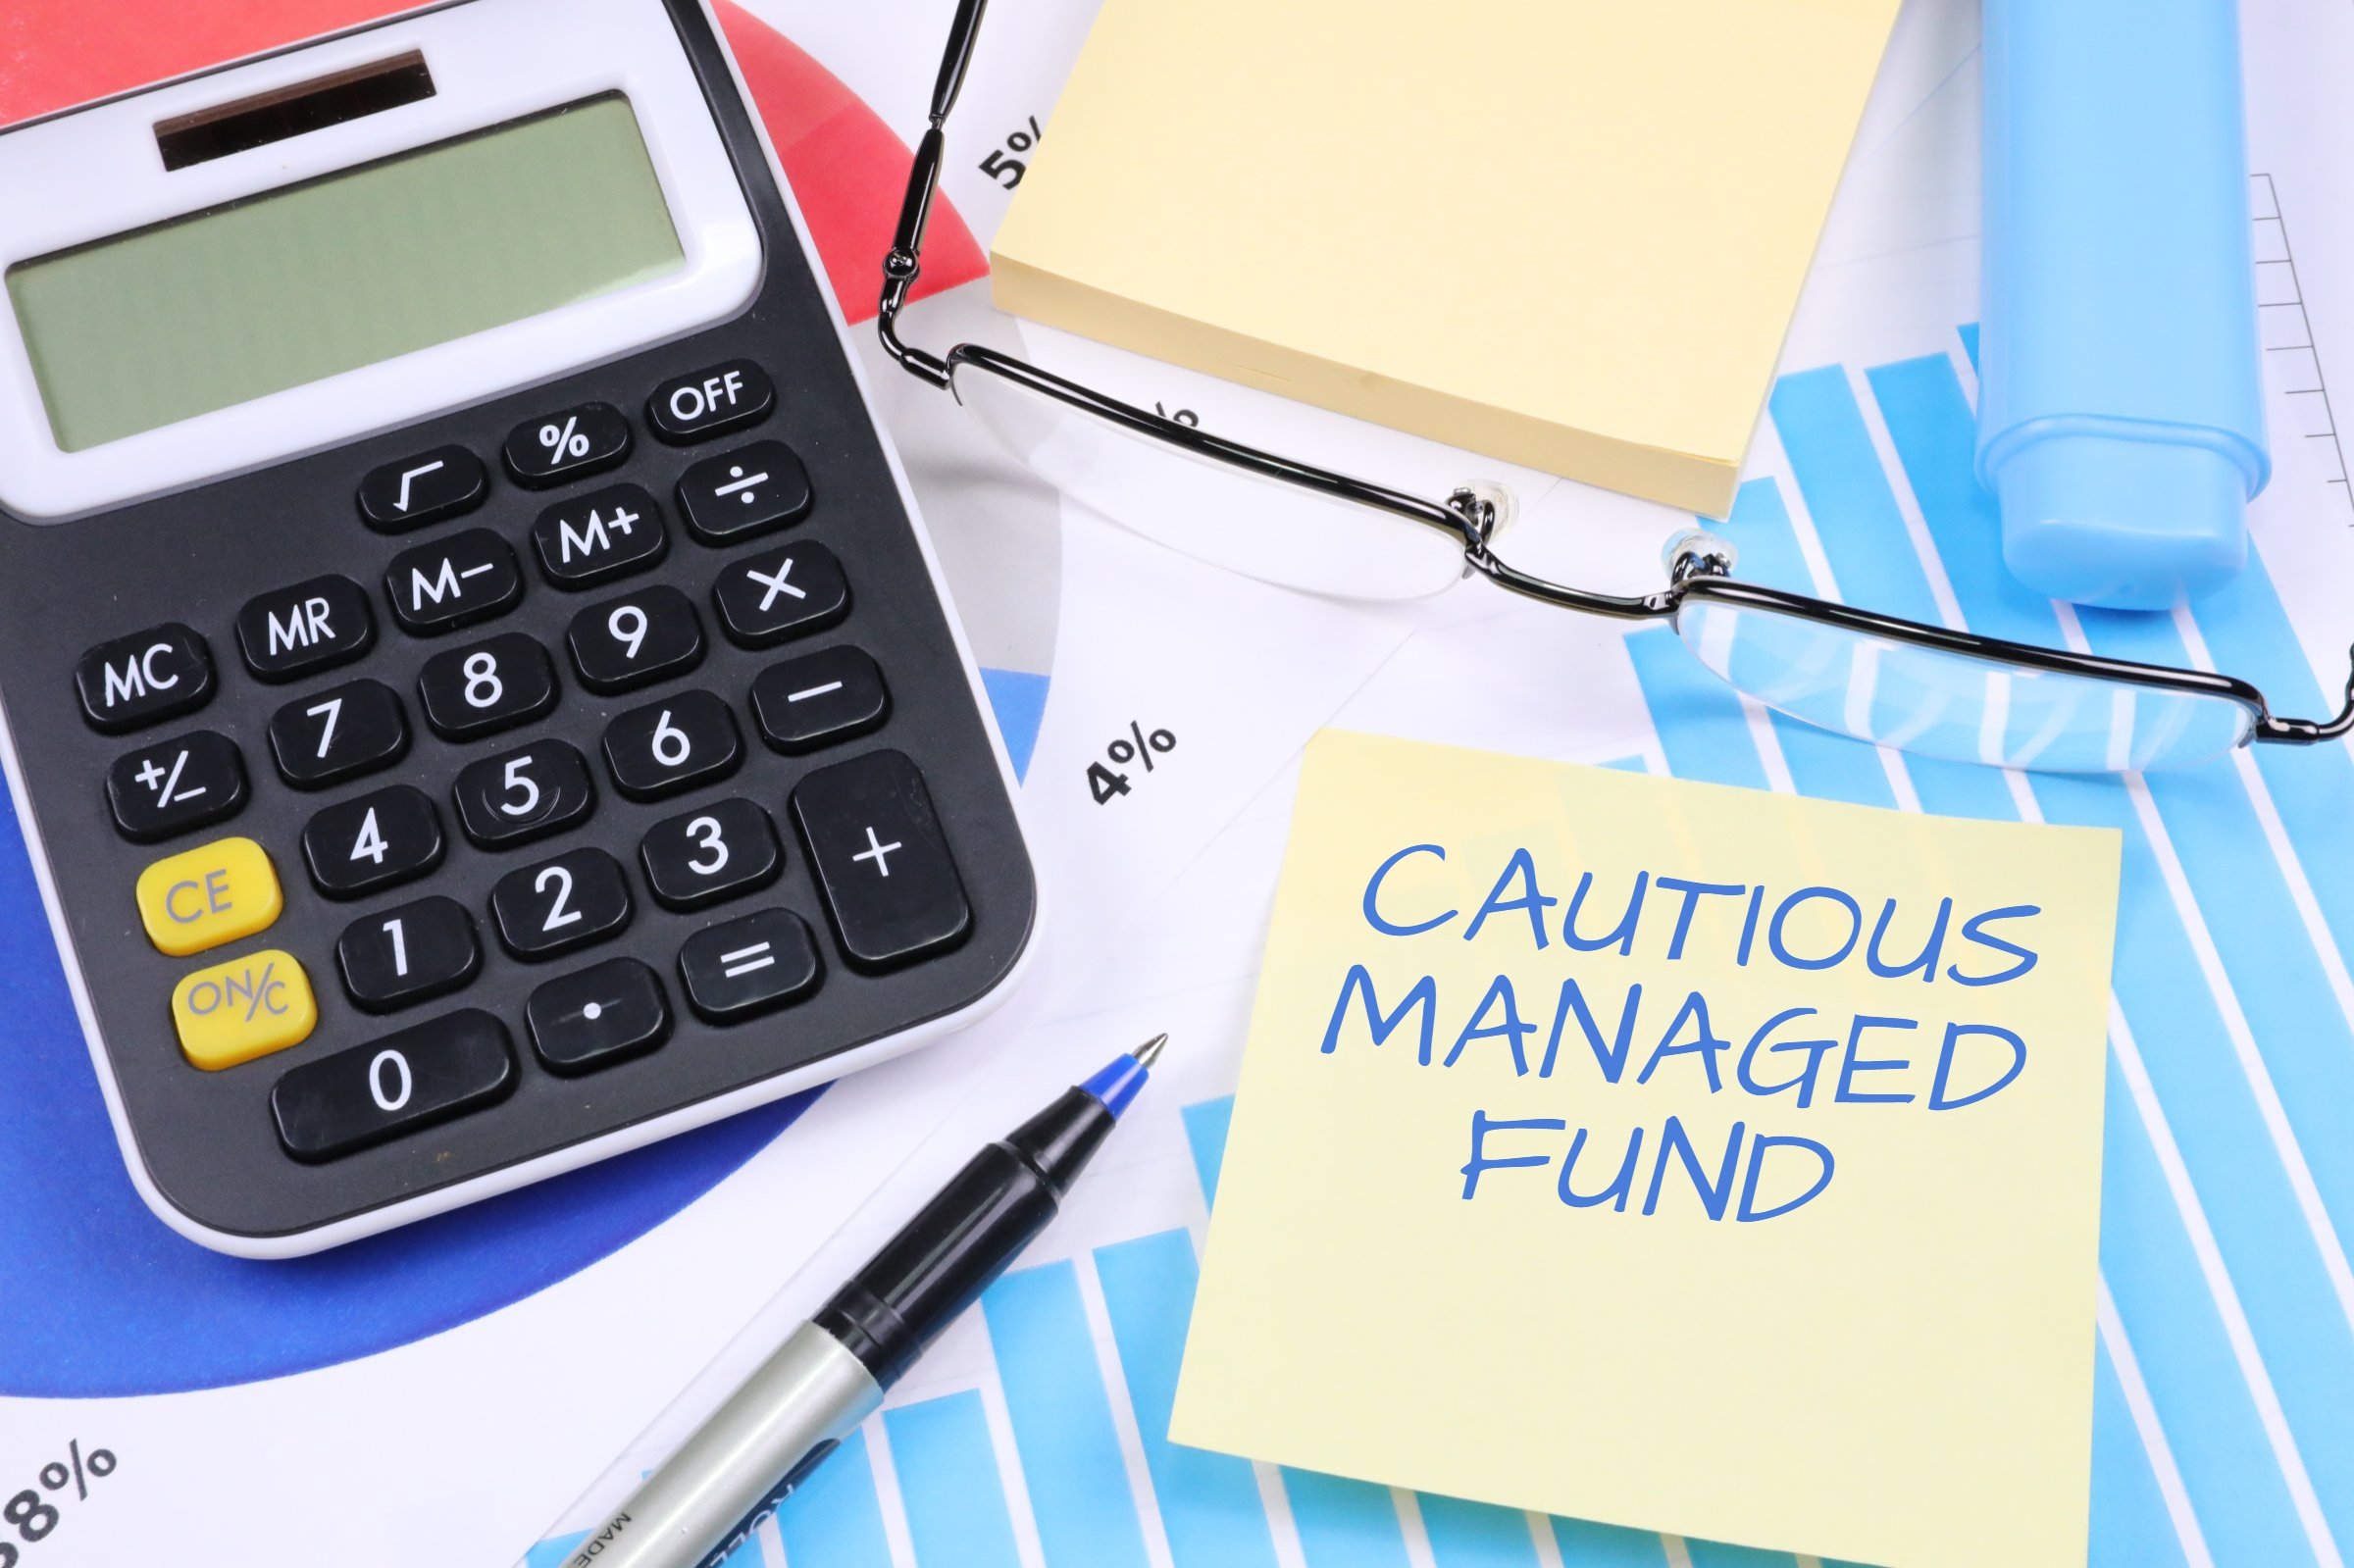 Cautious Managed Fund